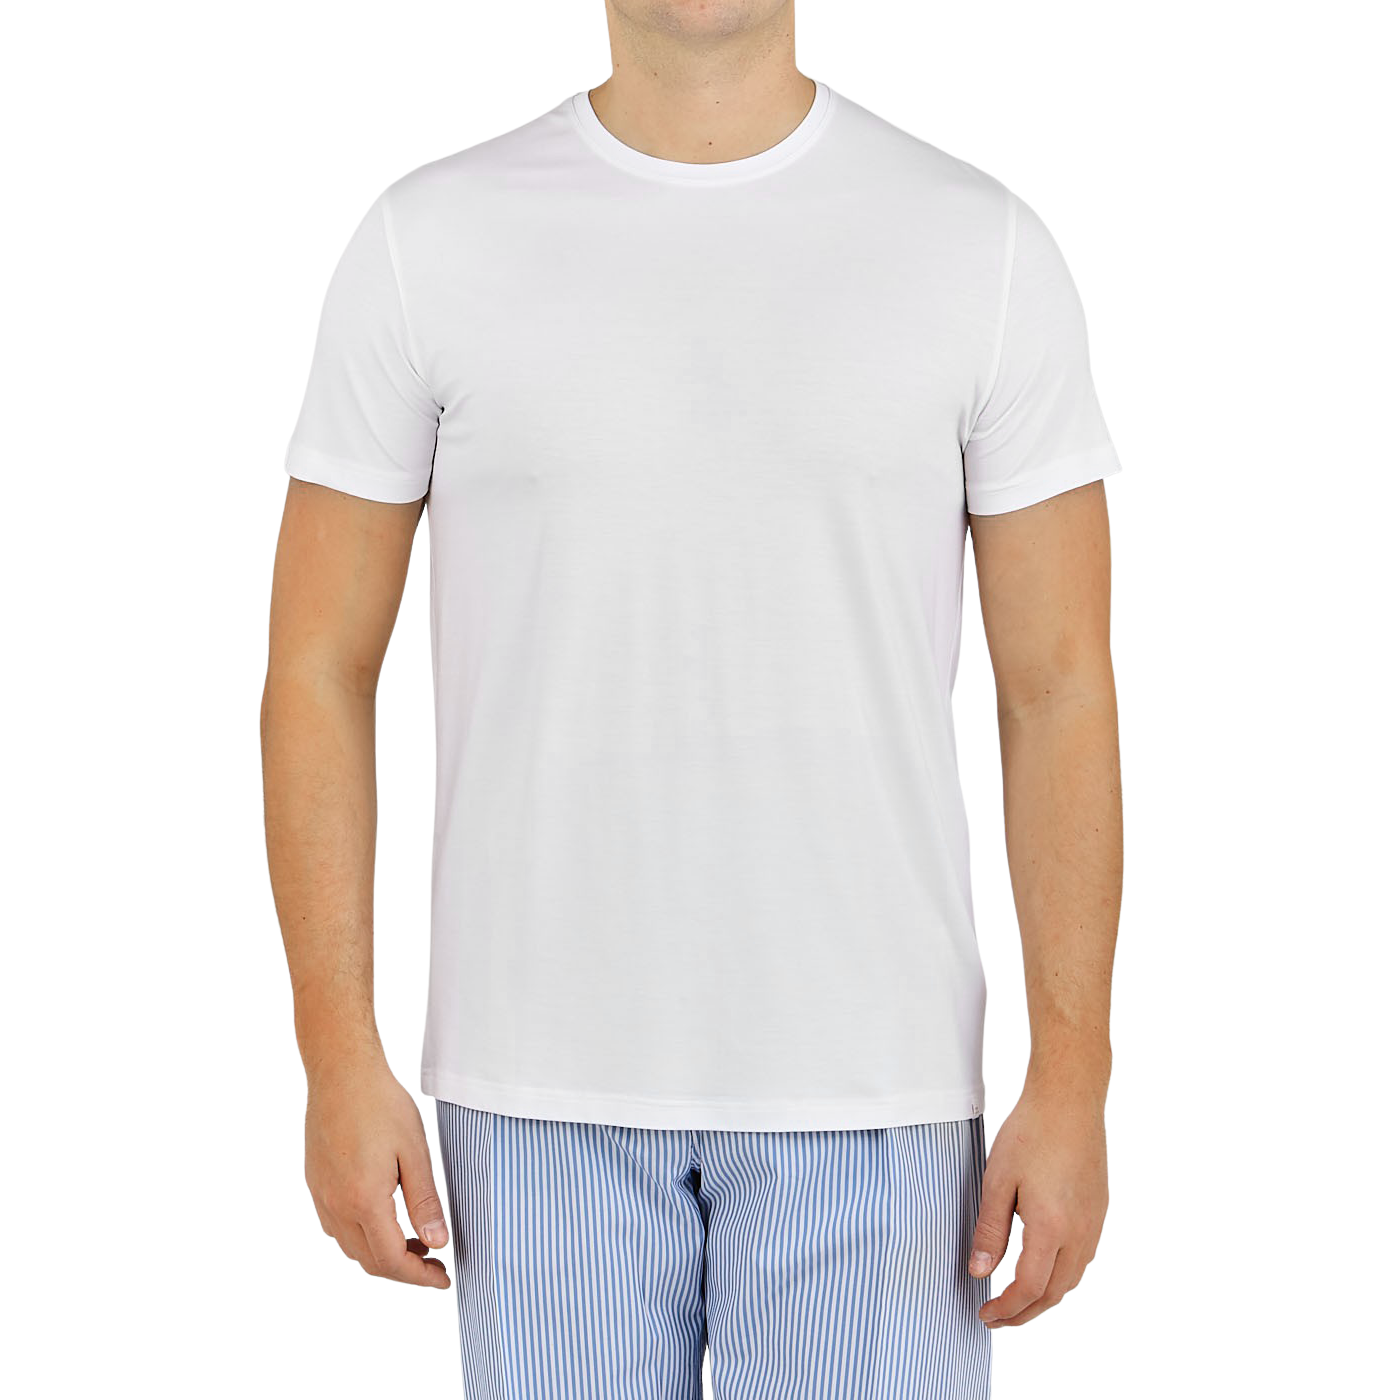 Derek Rose White Micro Modal Stretch T-shirt Front